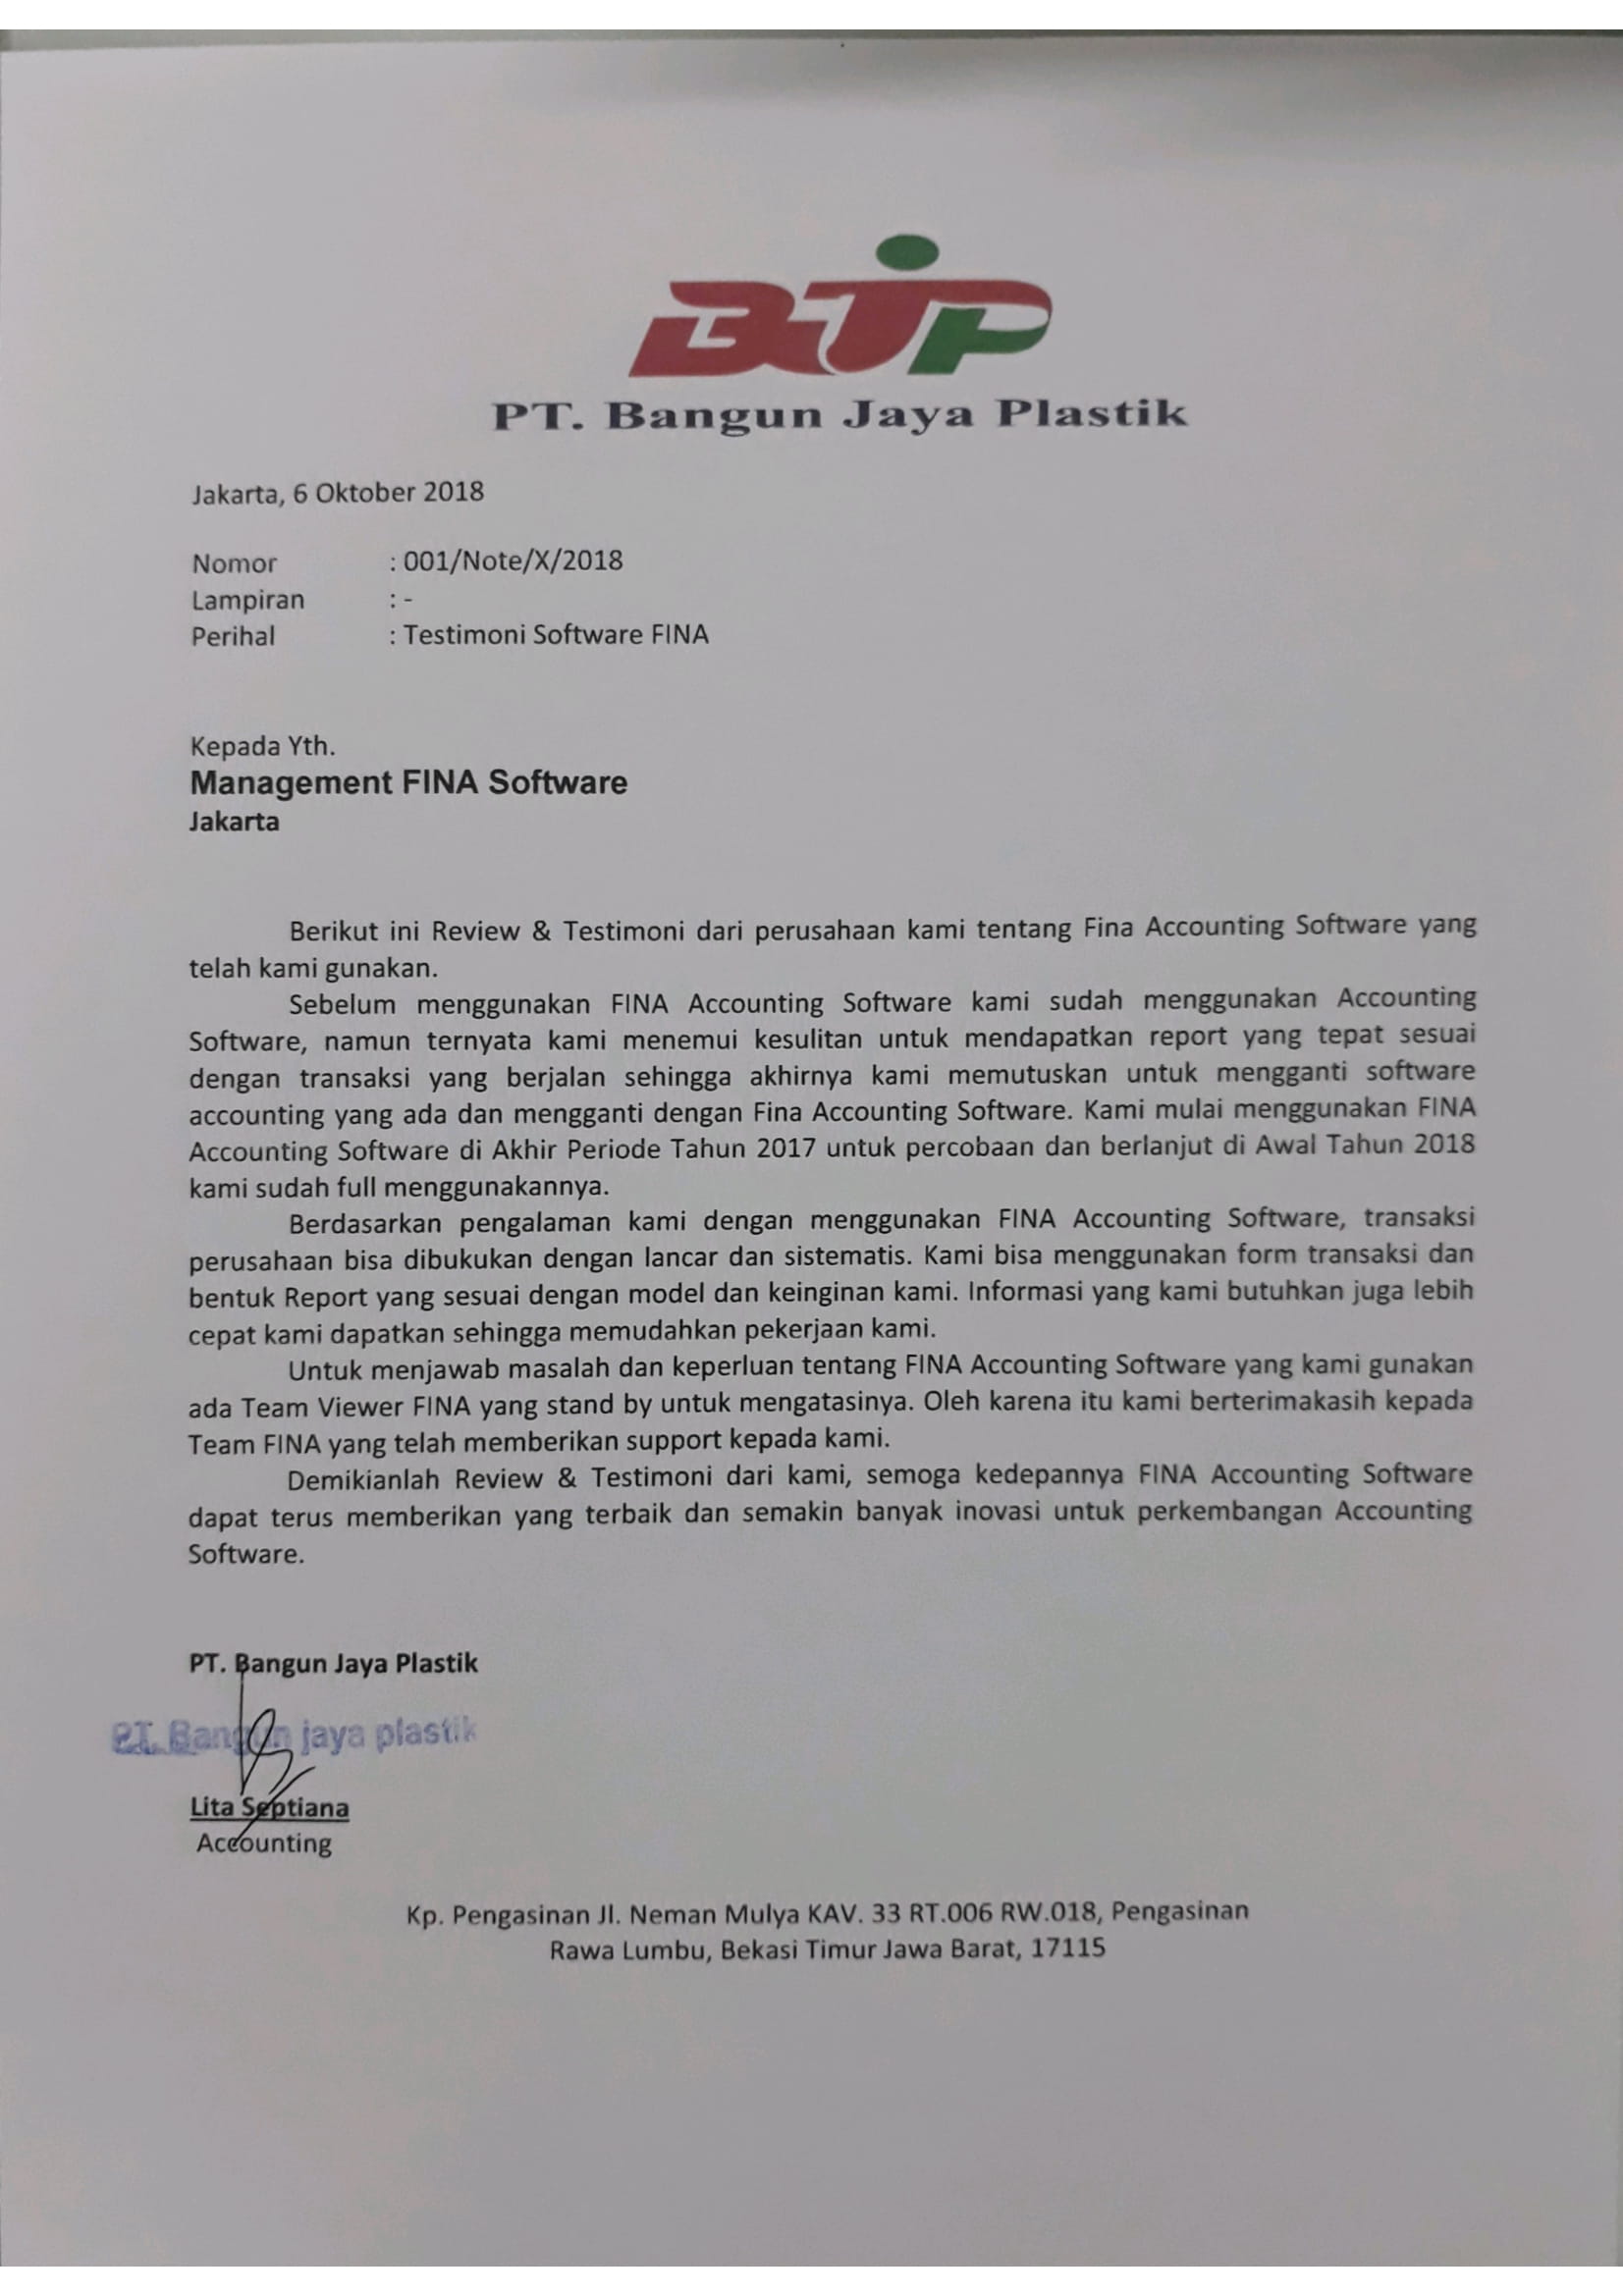 Testimoni FINA Software Akuntansi dari Lita Septiana selaku Accounting Division PT. Bangun Jaya Plastik